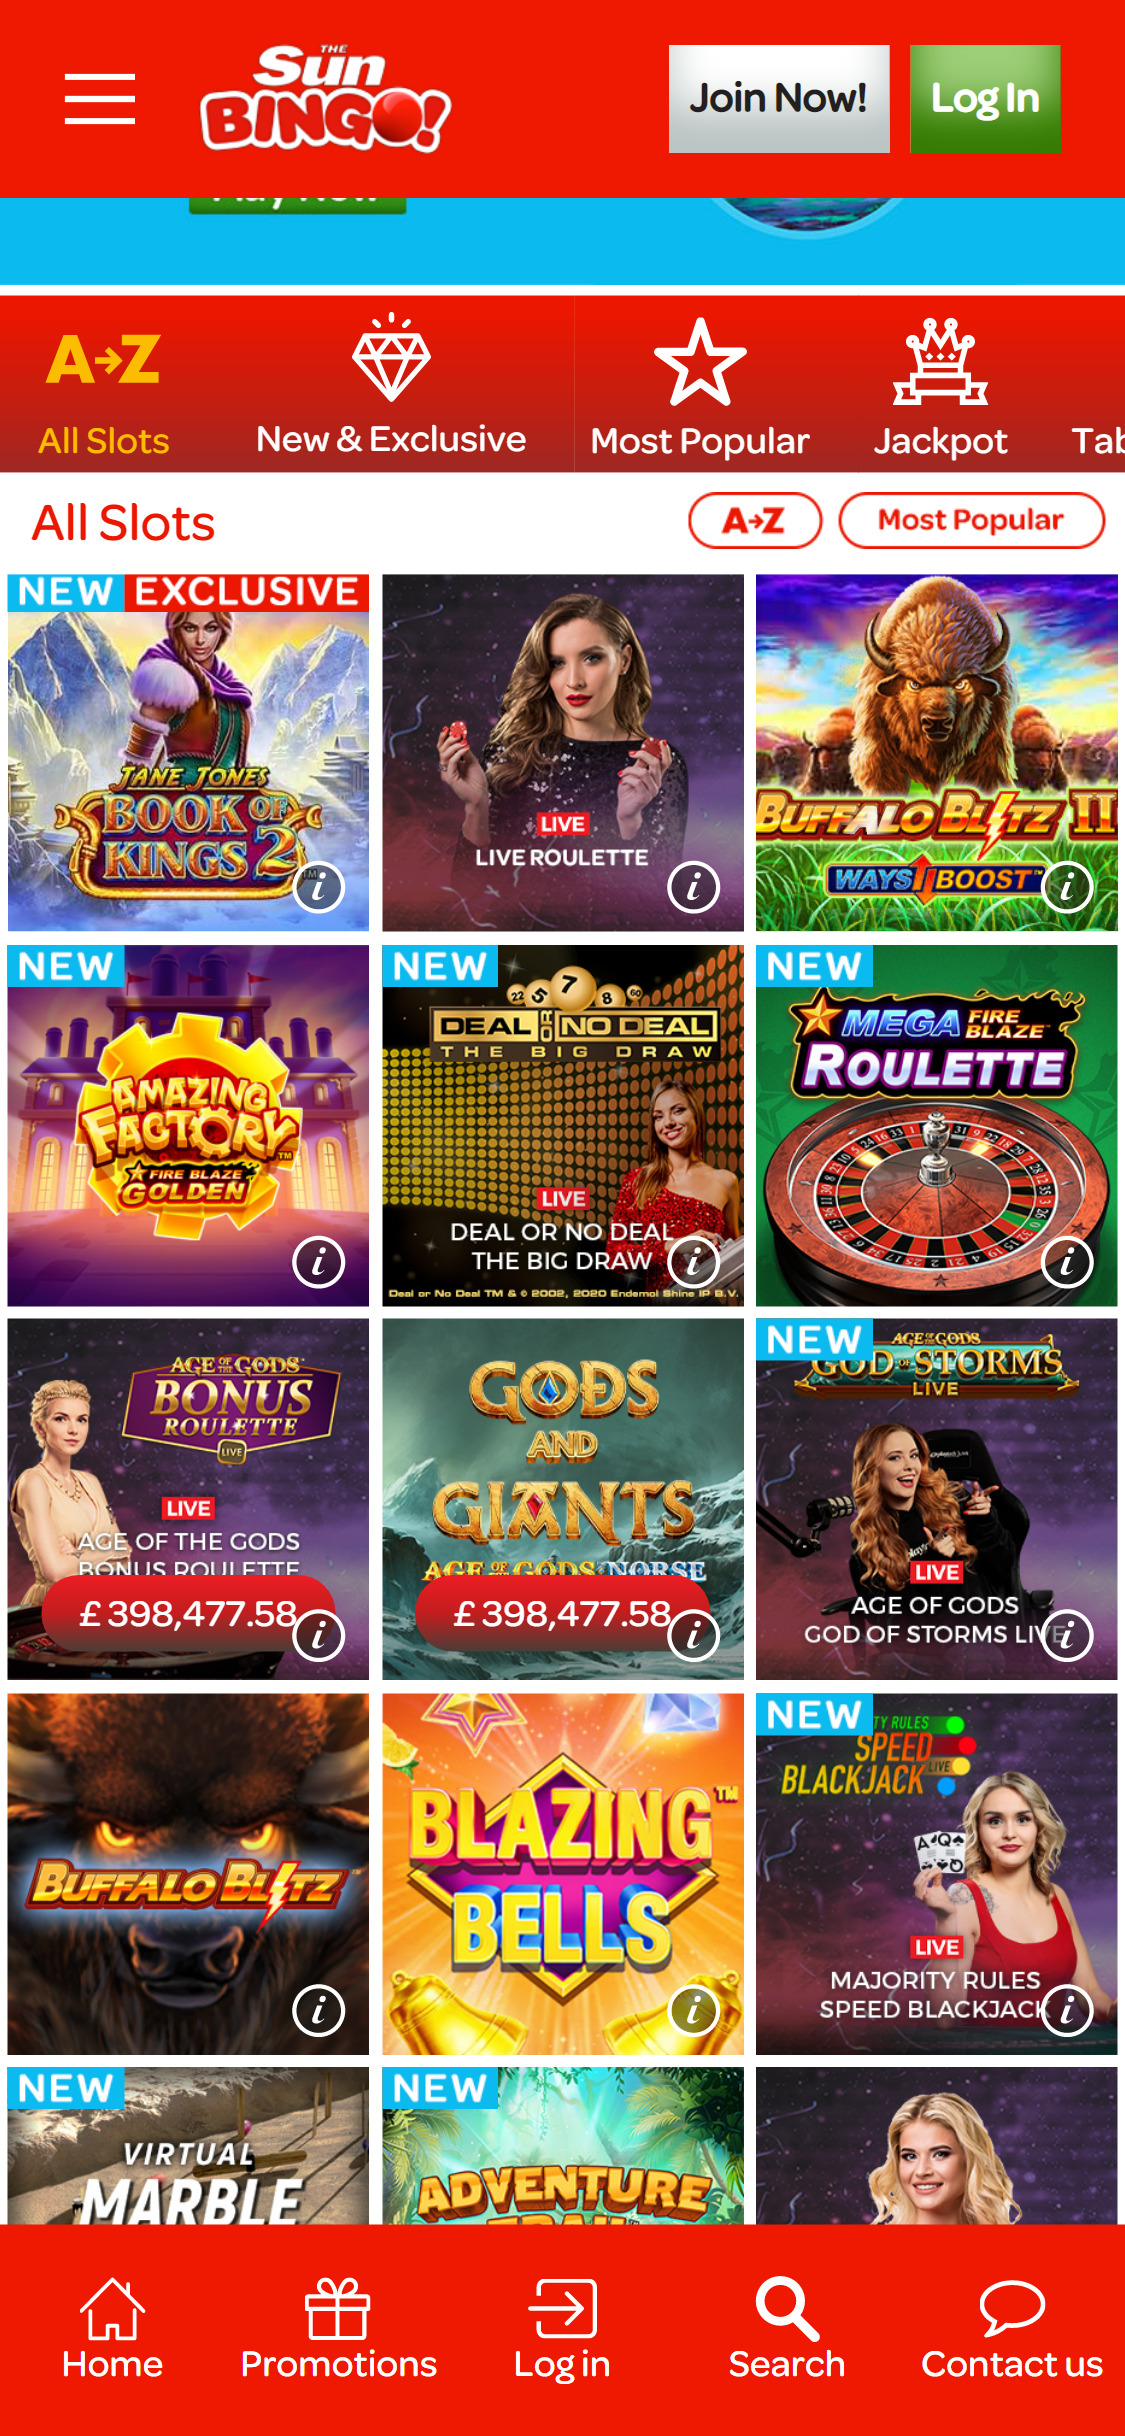 Sunbingo Casino Mobile Games Review